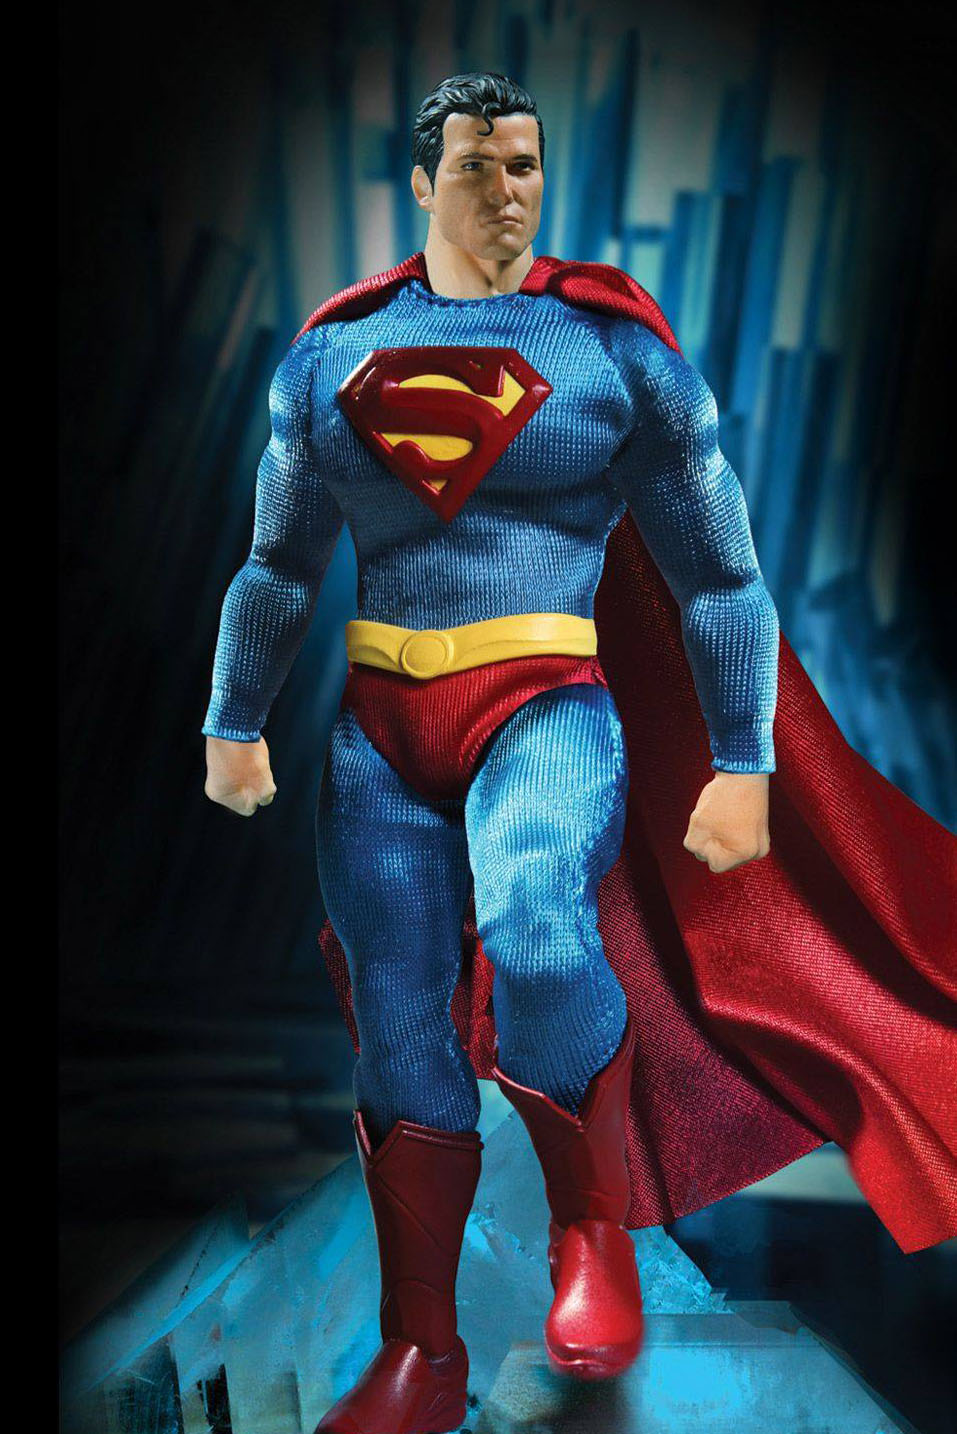 MEZCO TOYZ Superman: Man of Steel Edition, DC Comics One:12 Collective